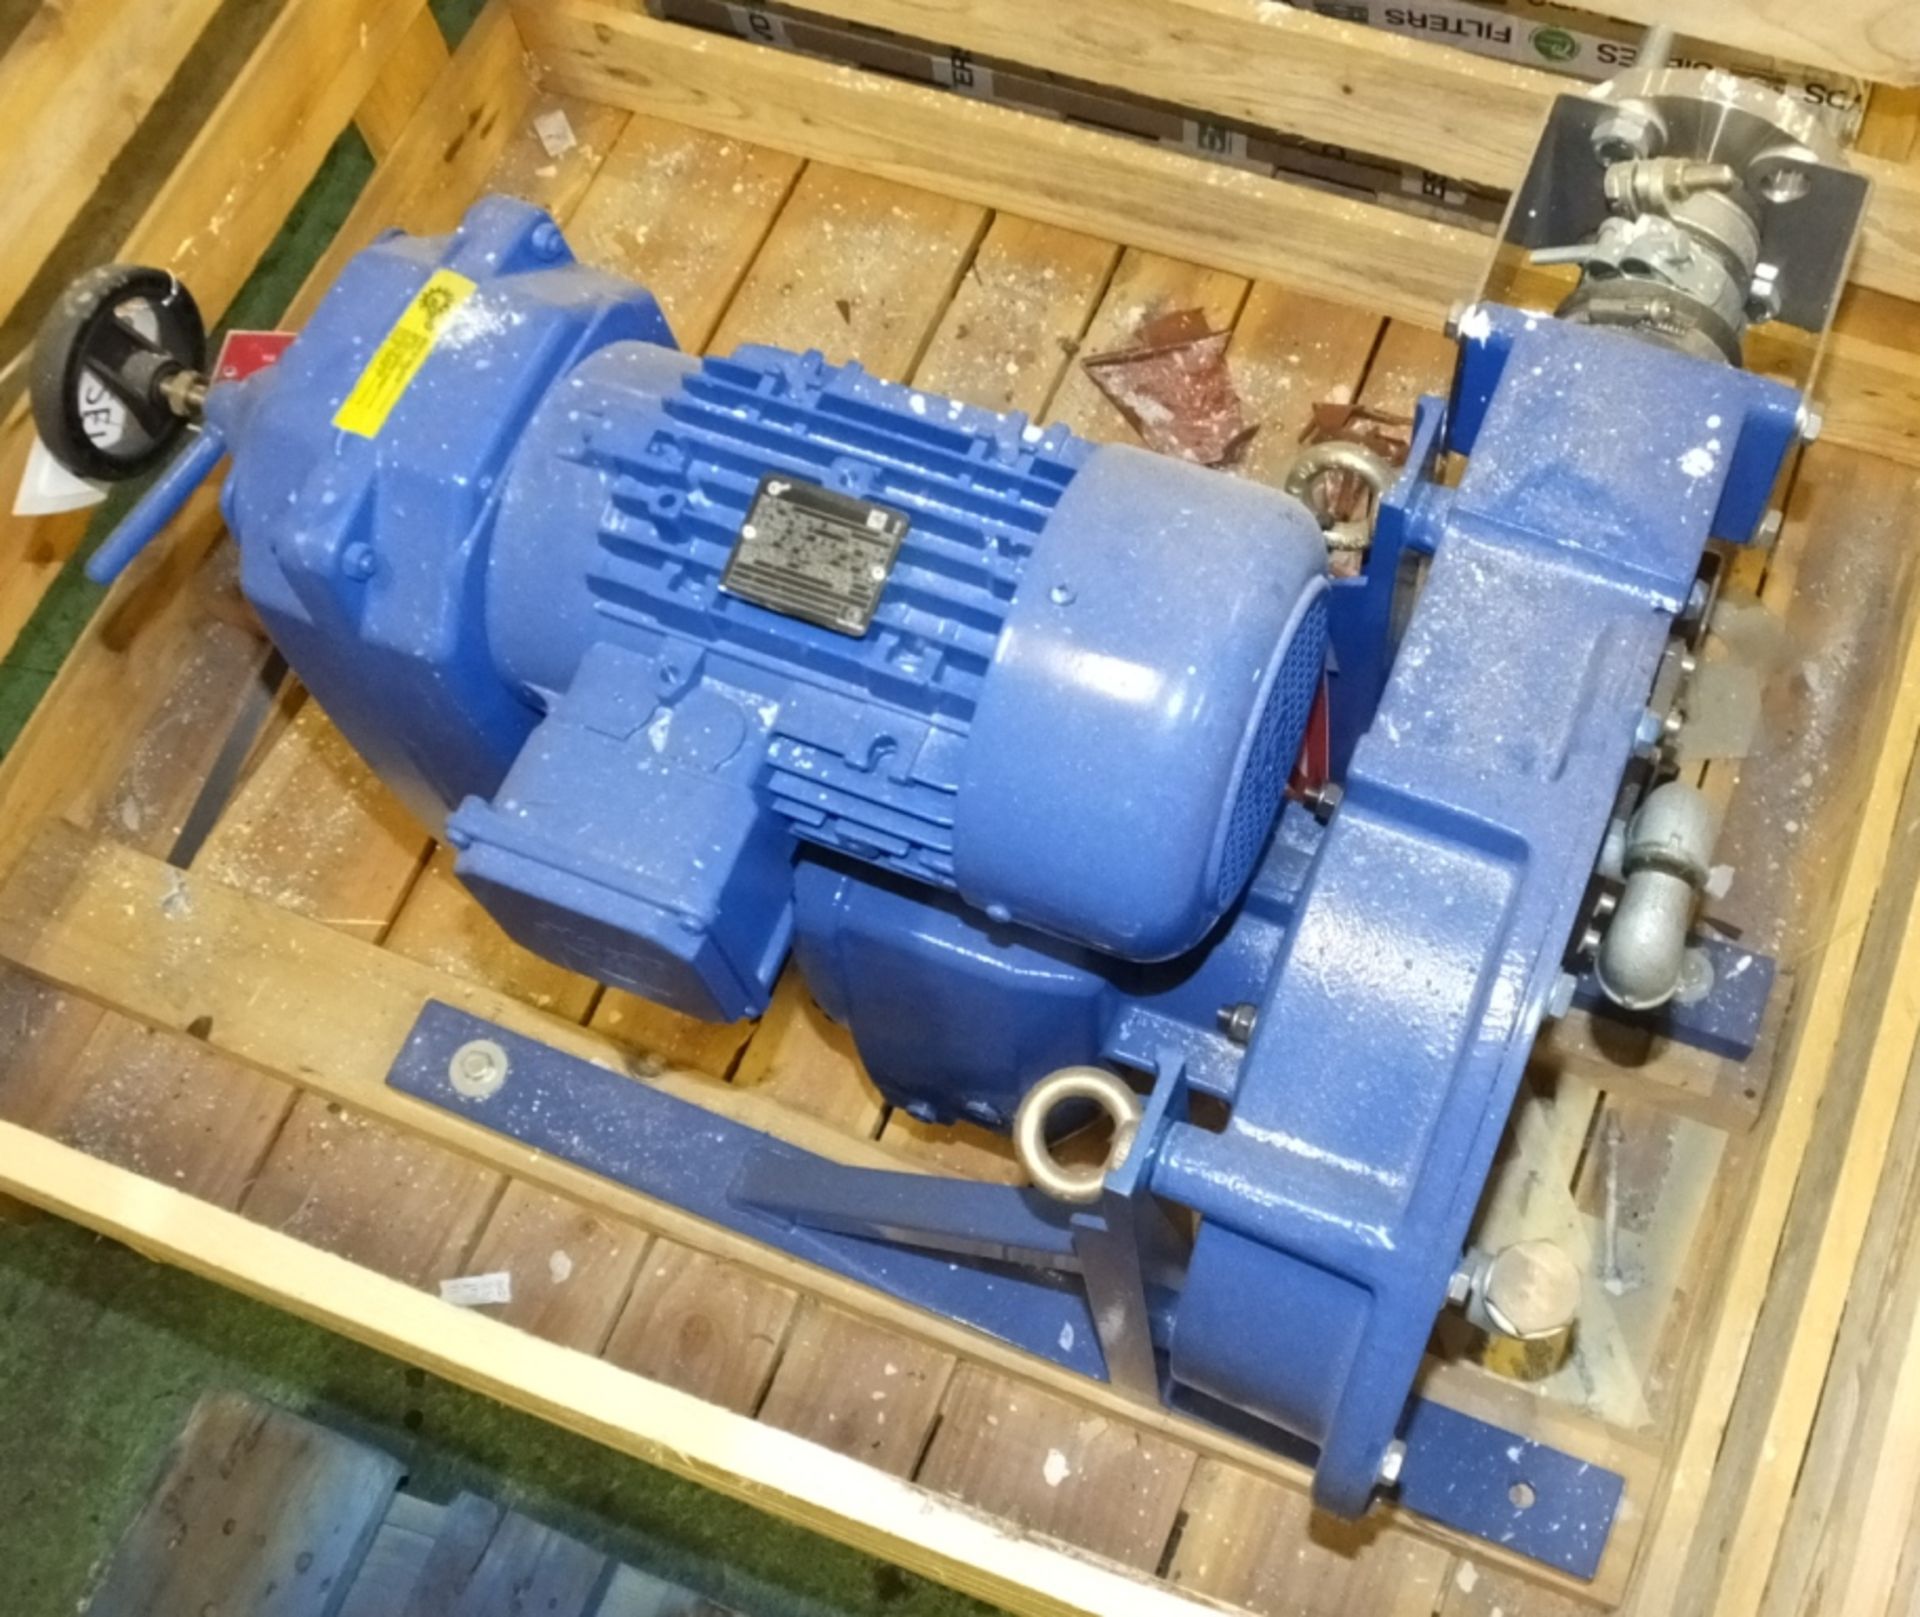 Motor & Pump assembly - SK100LA - Image 3 of 3